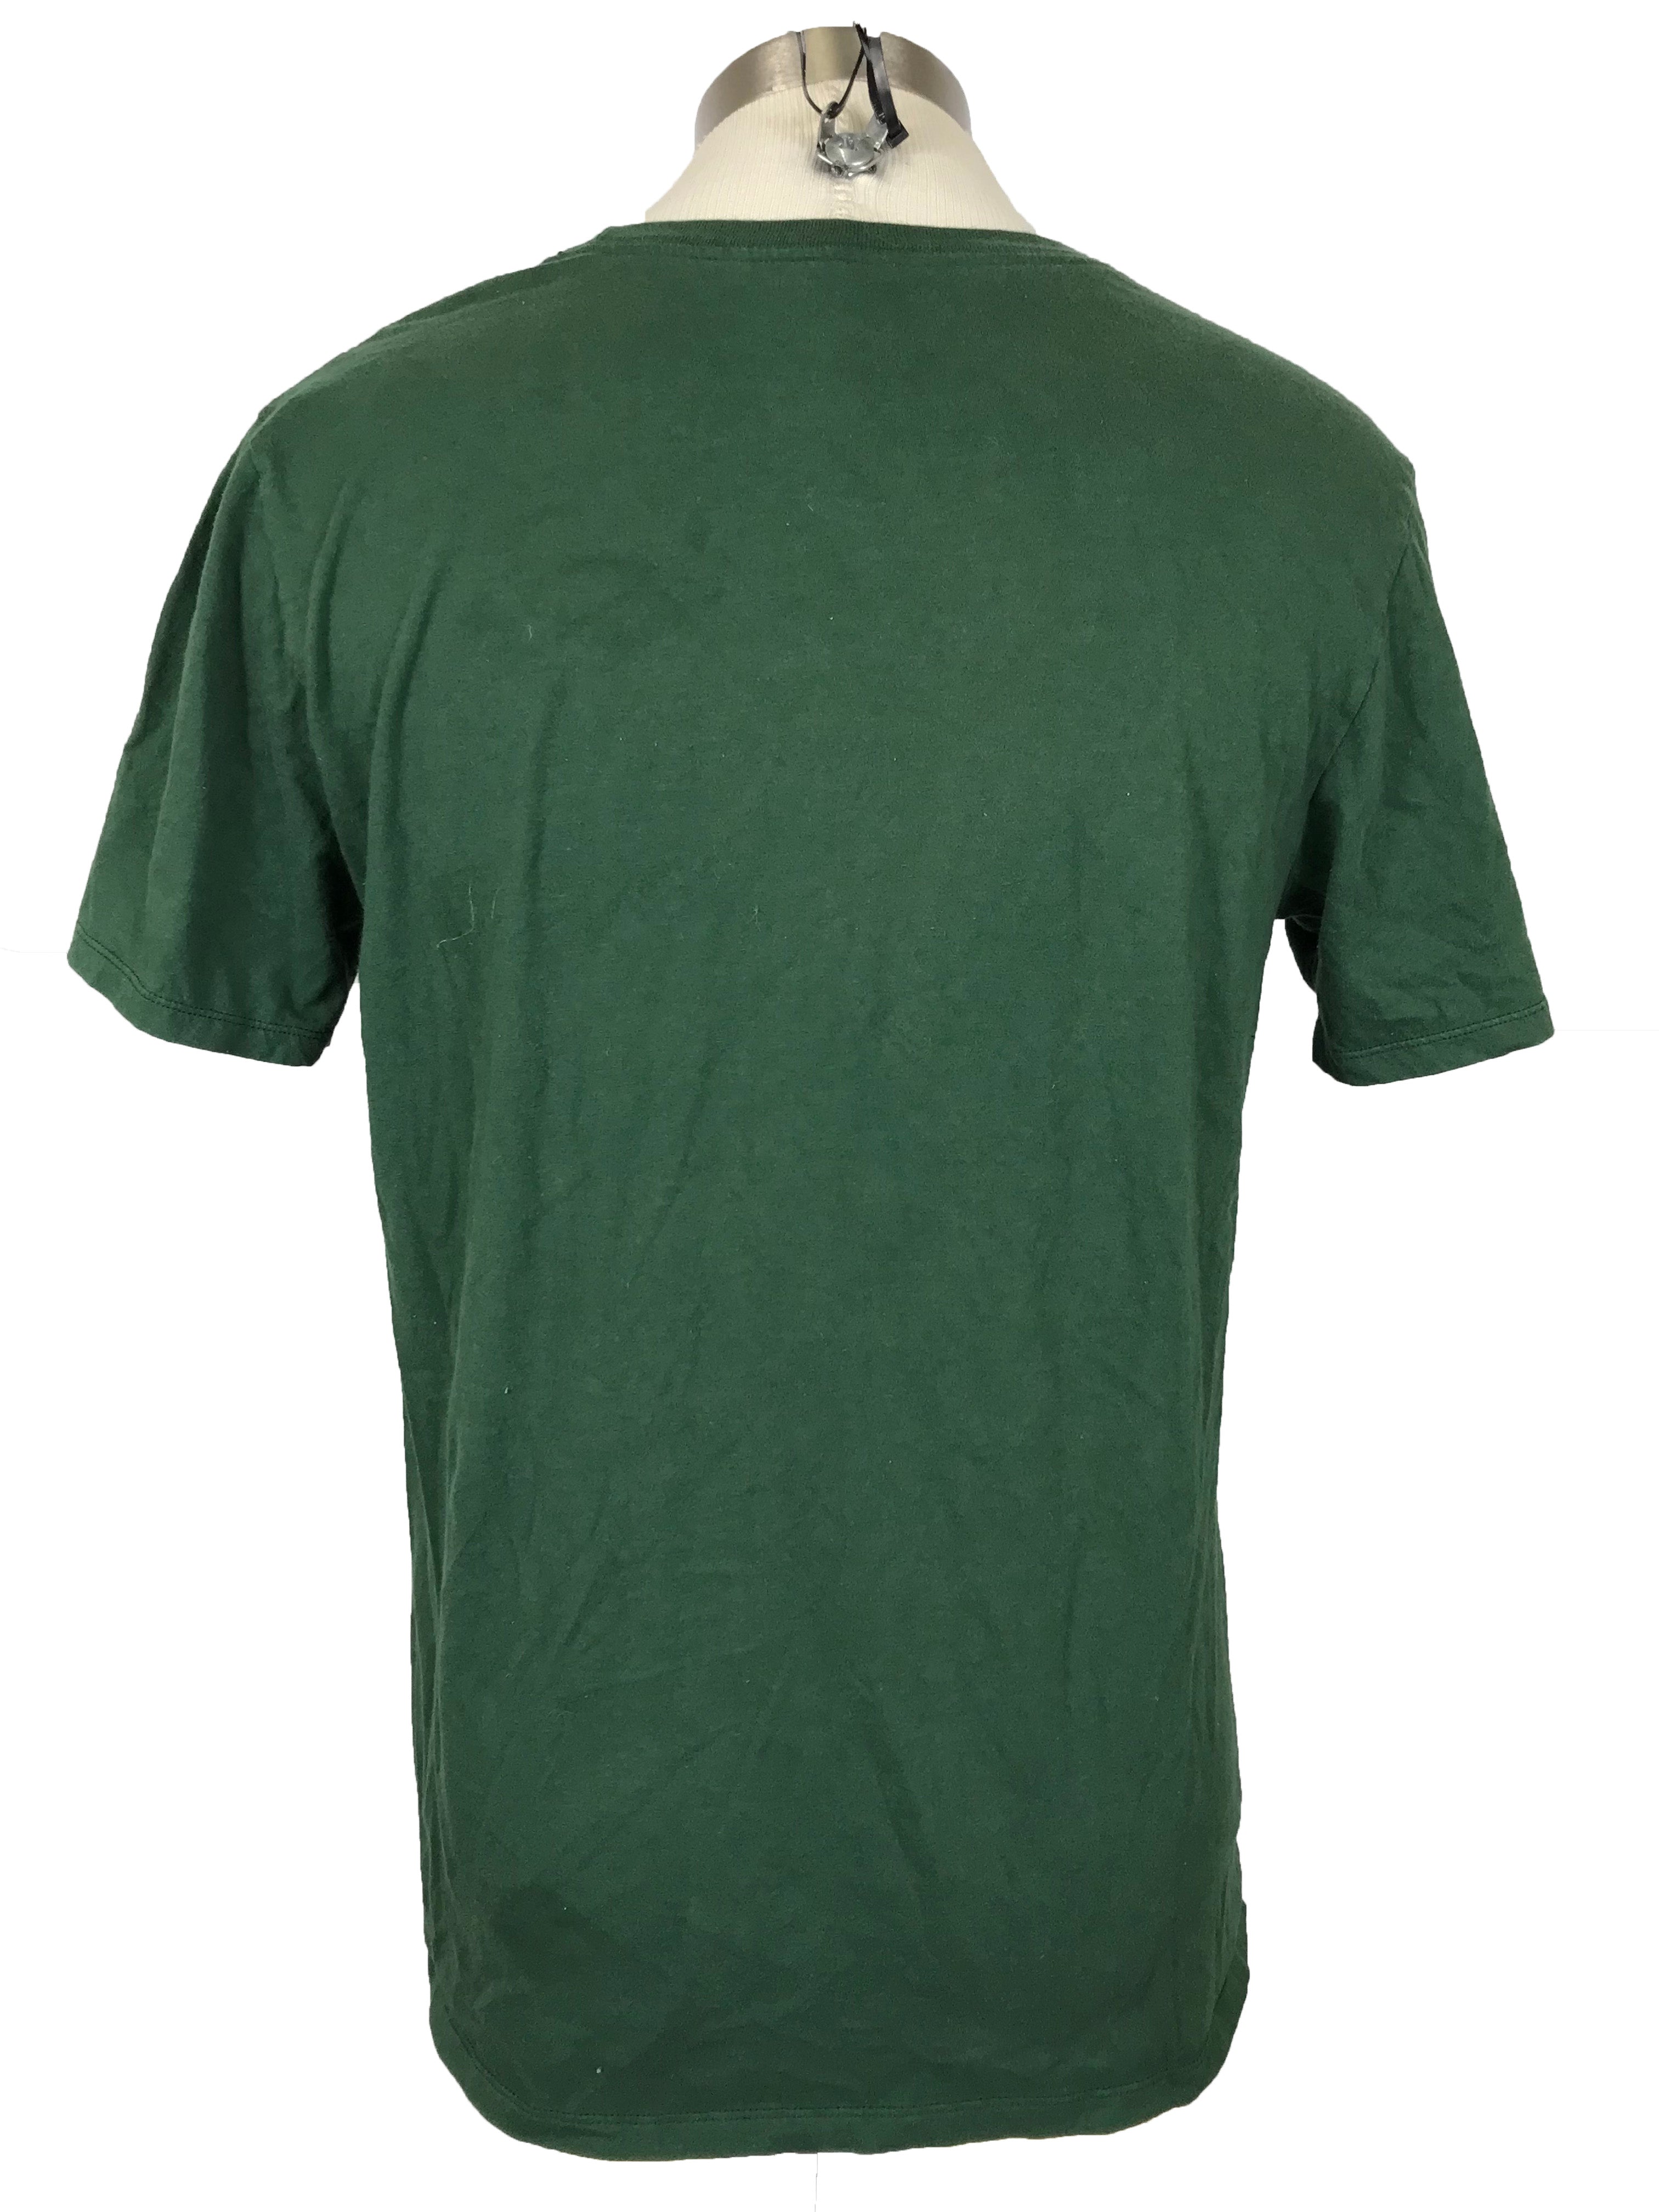 Nike Green MSU 2018 Football T-Shirt Unisex Size Large